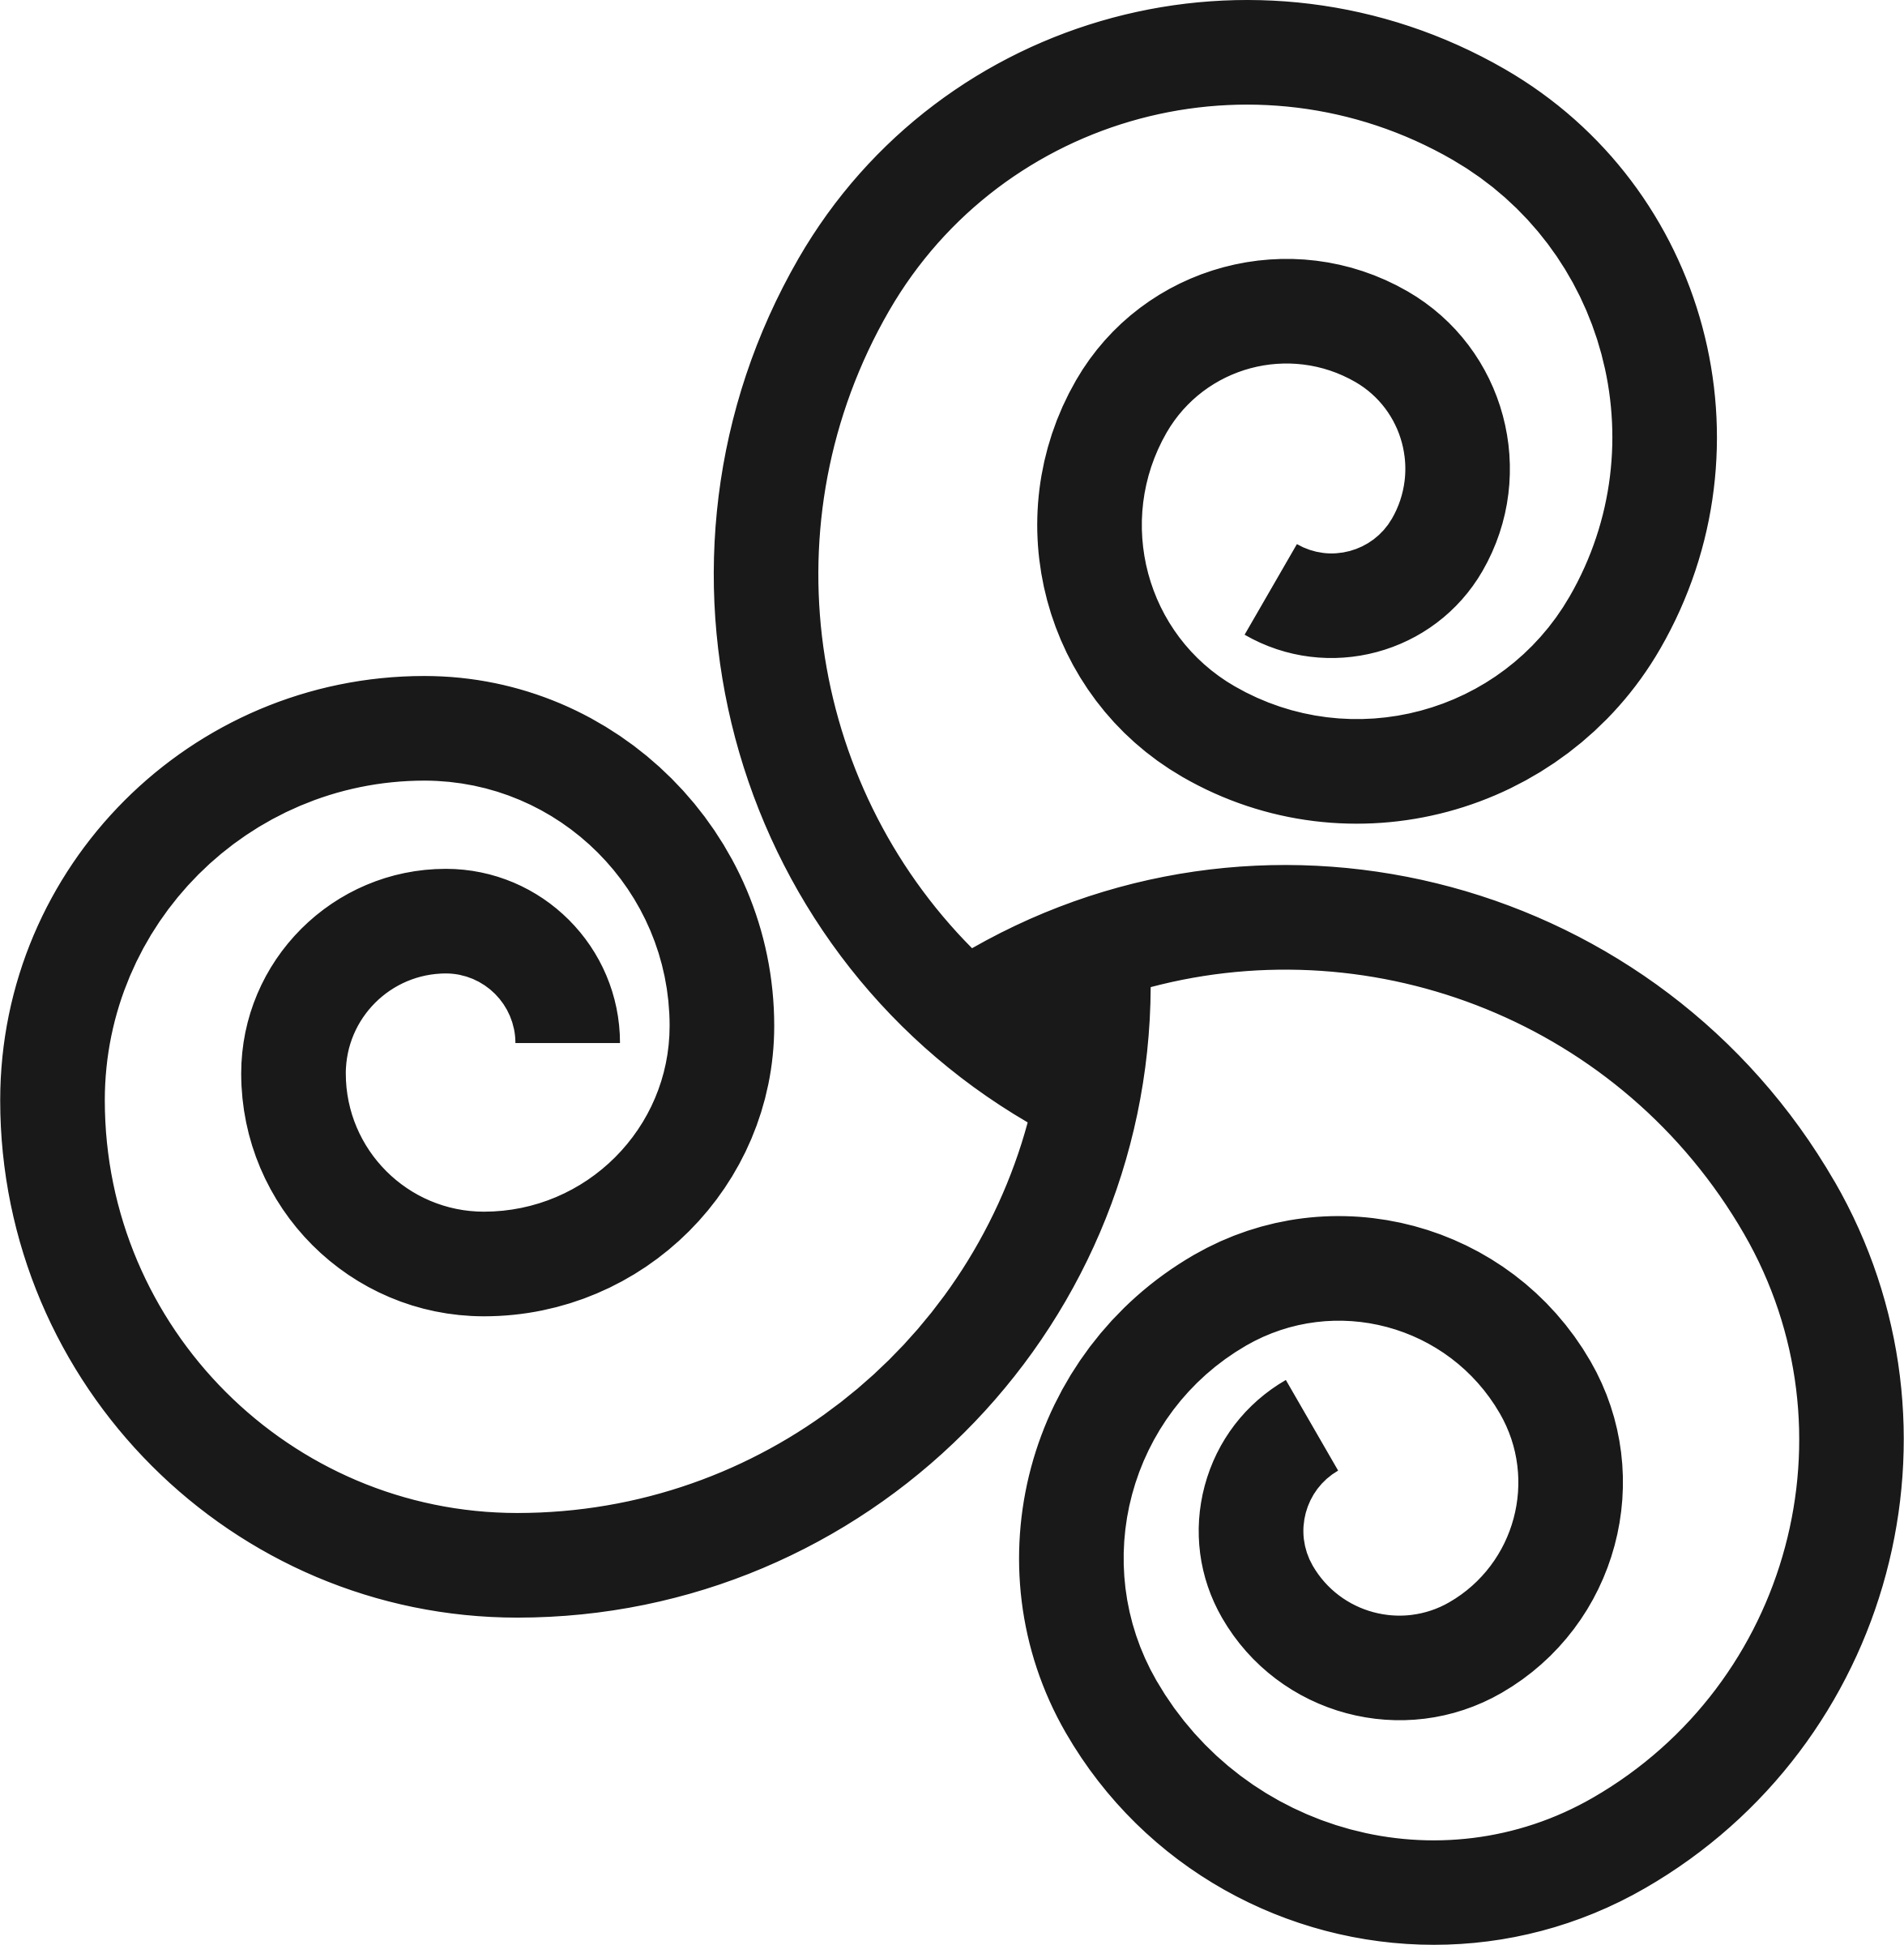 Triskelion - Symbols Of Balance (2350x2400)